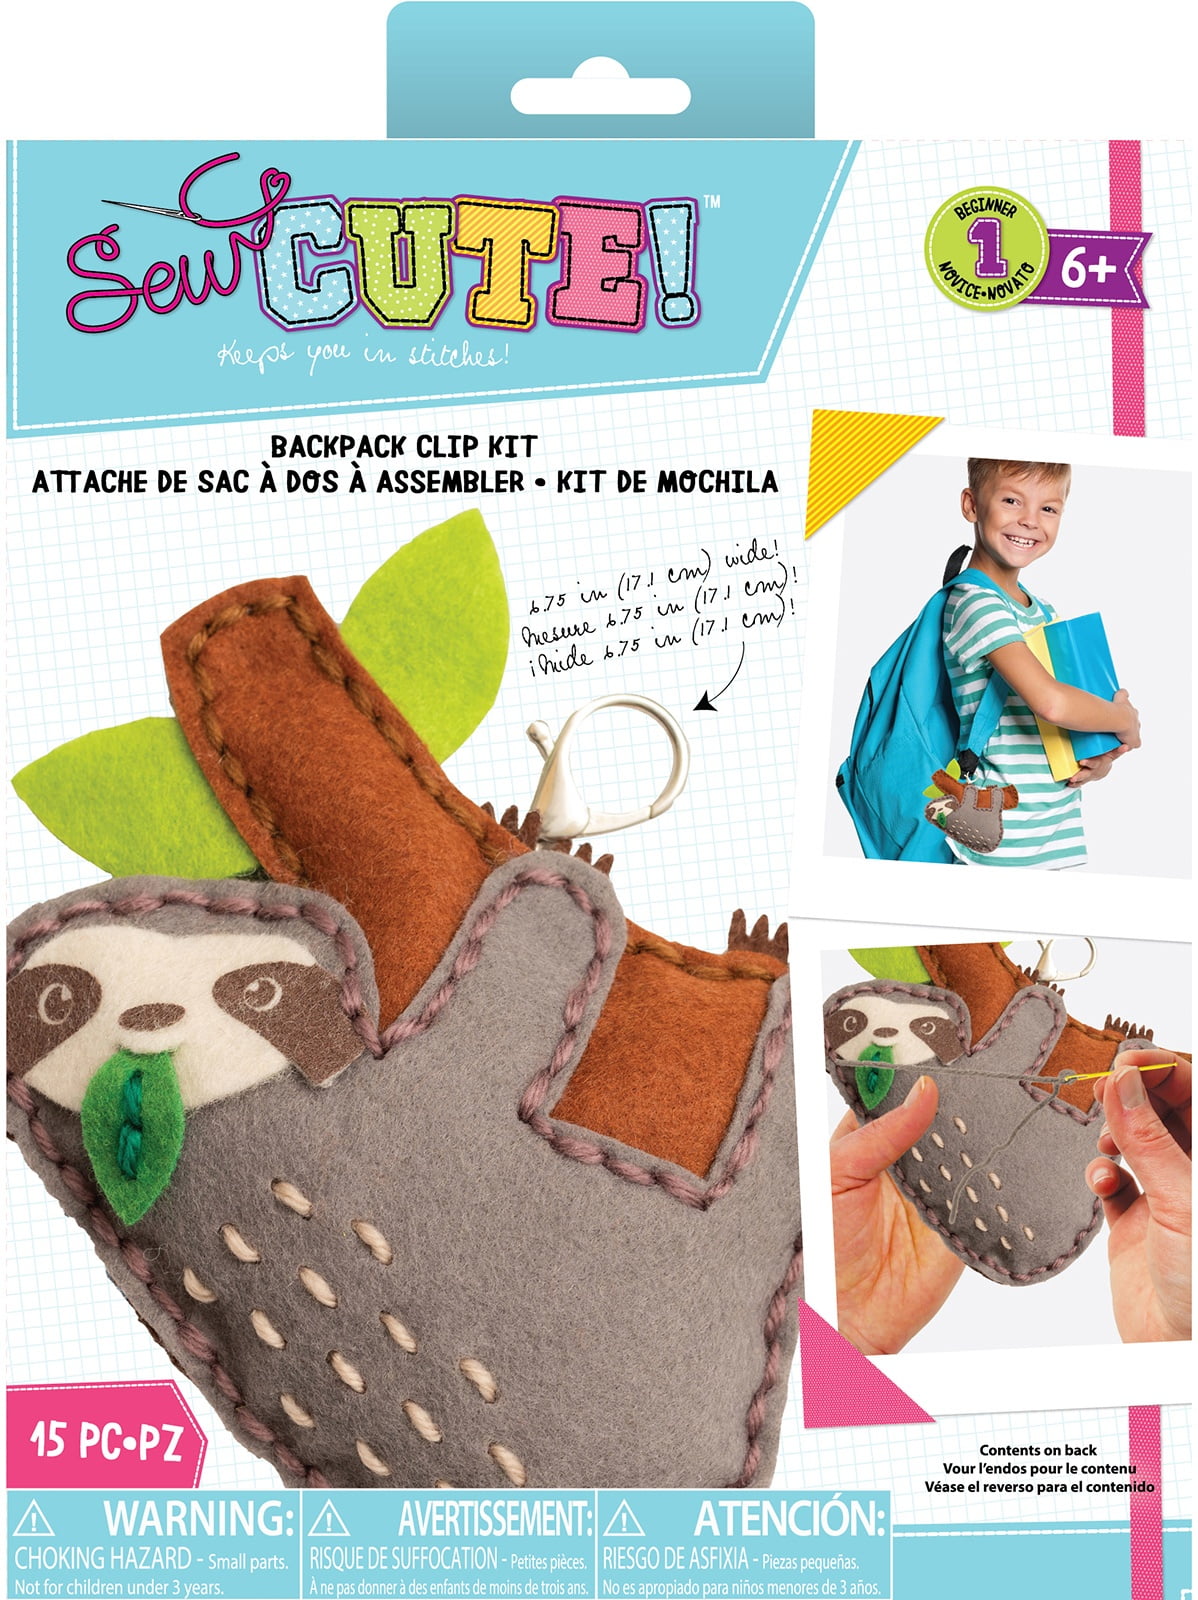 Colorbok Sew Cute! Felt Backpack Clip Kit